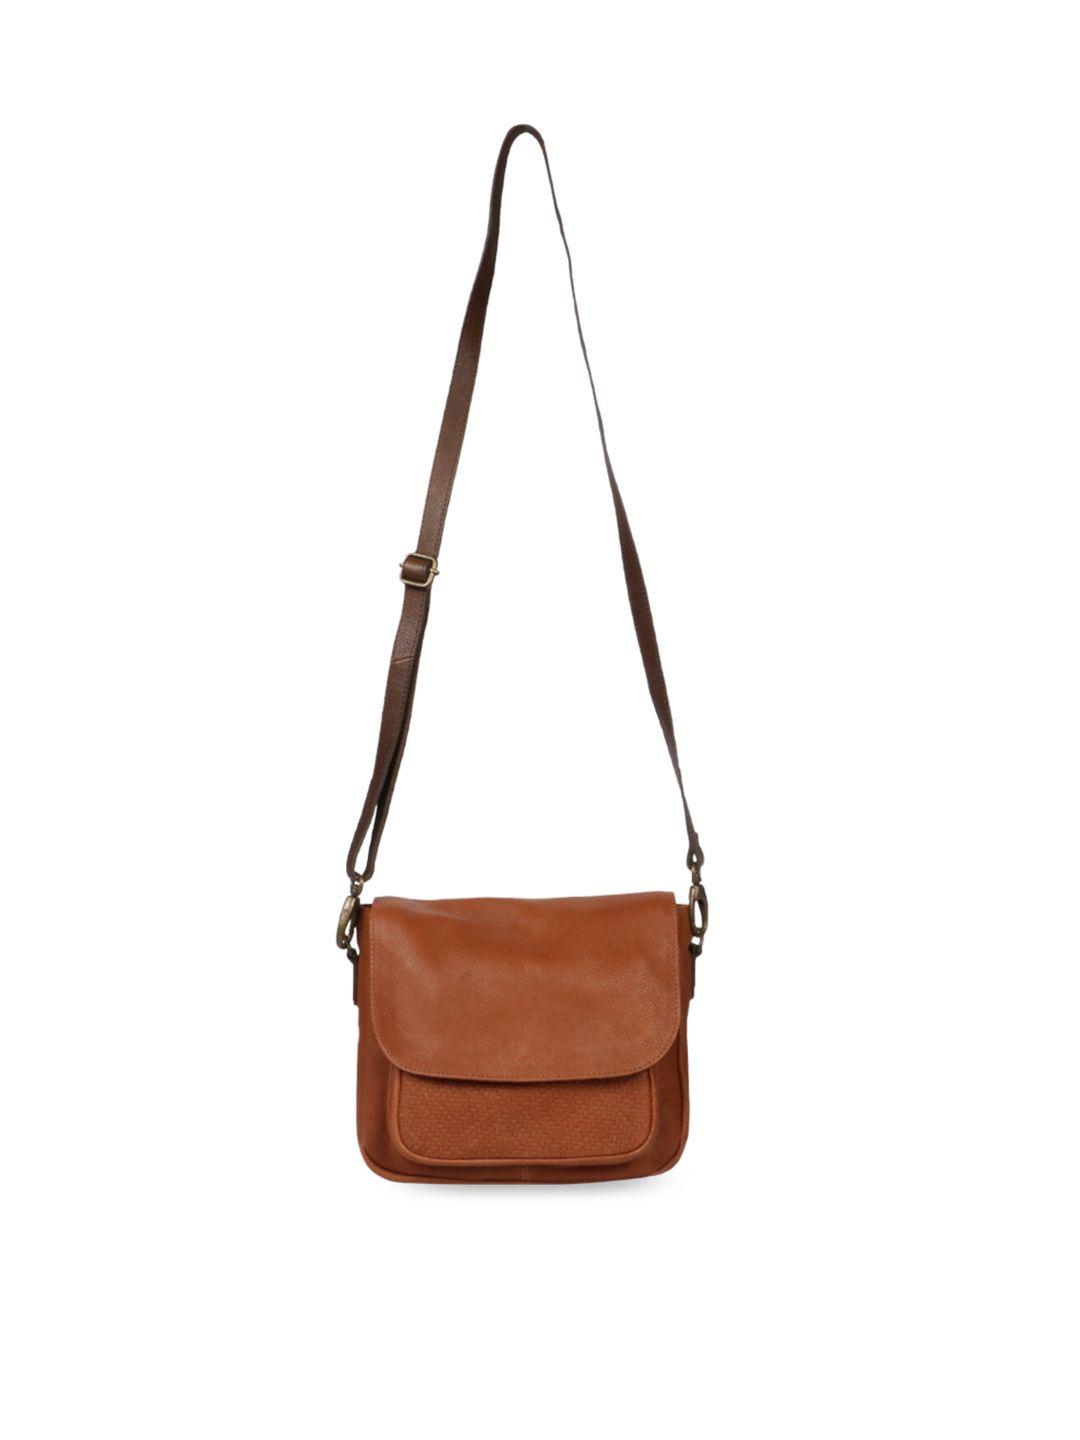 saint g tan structured leather sling bag